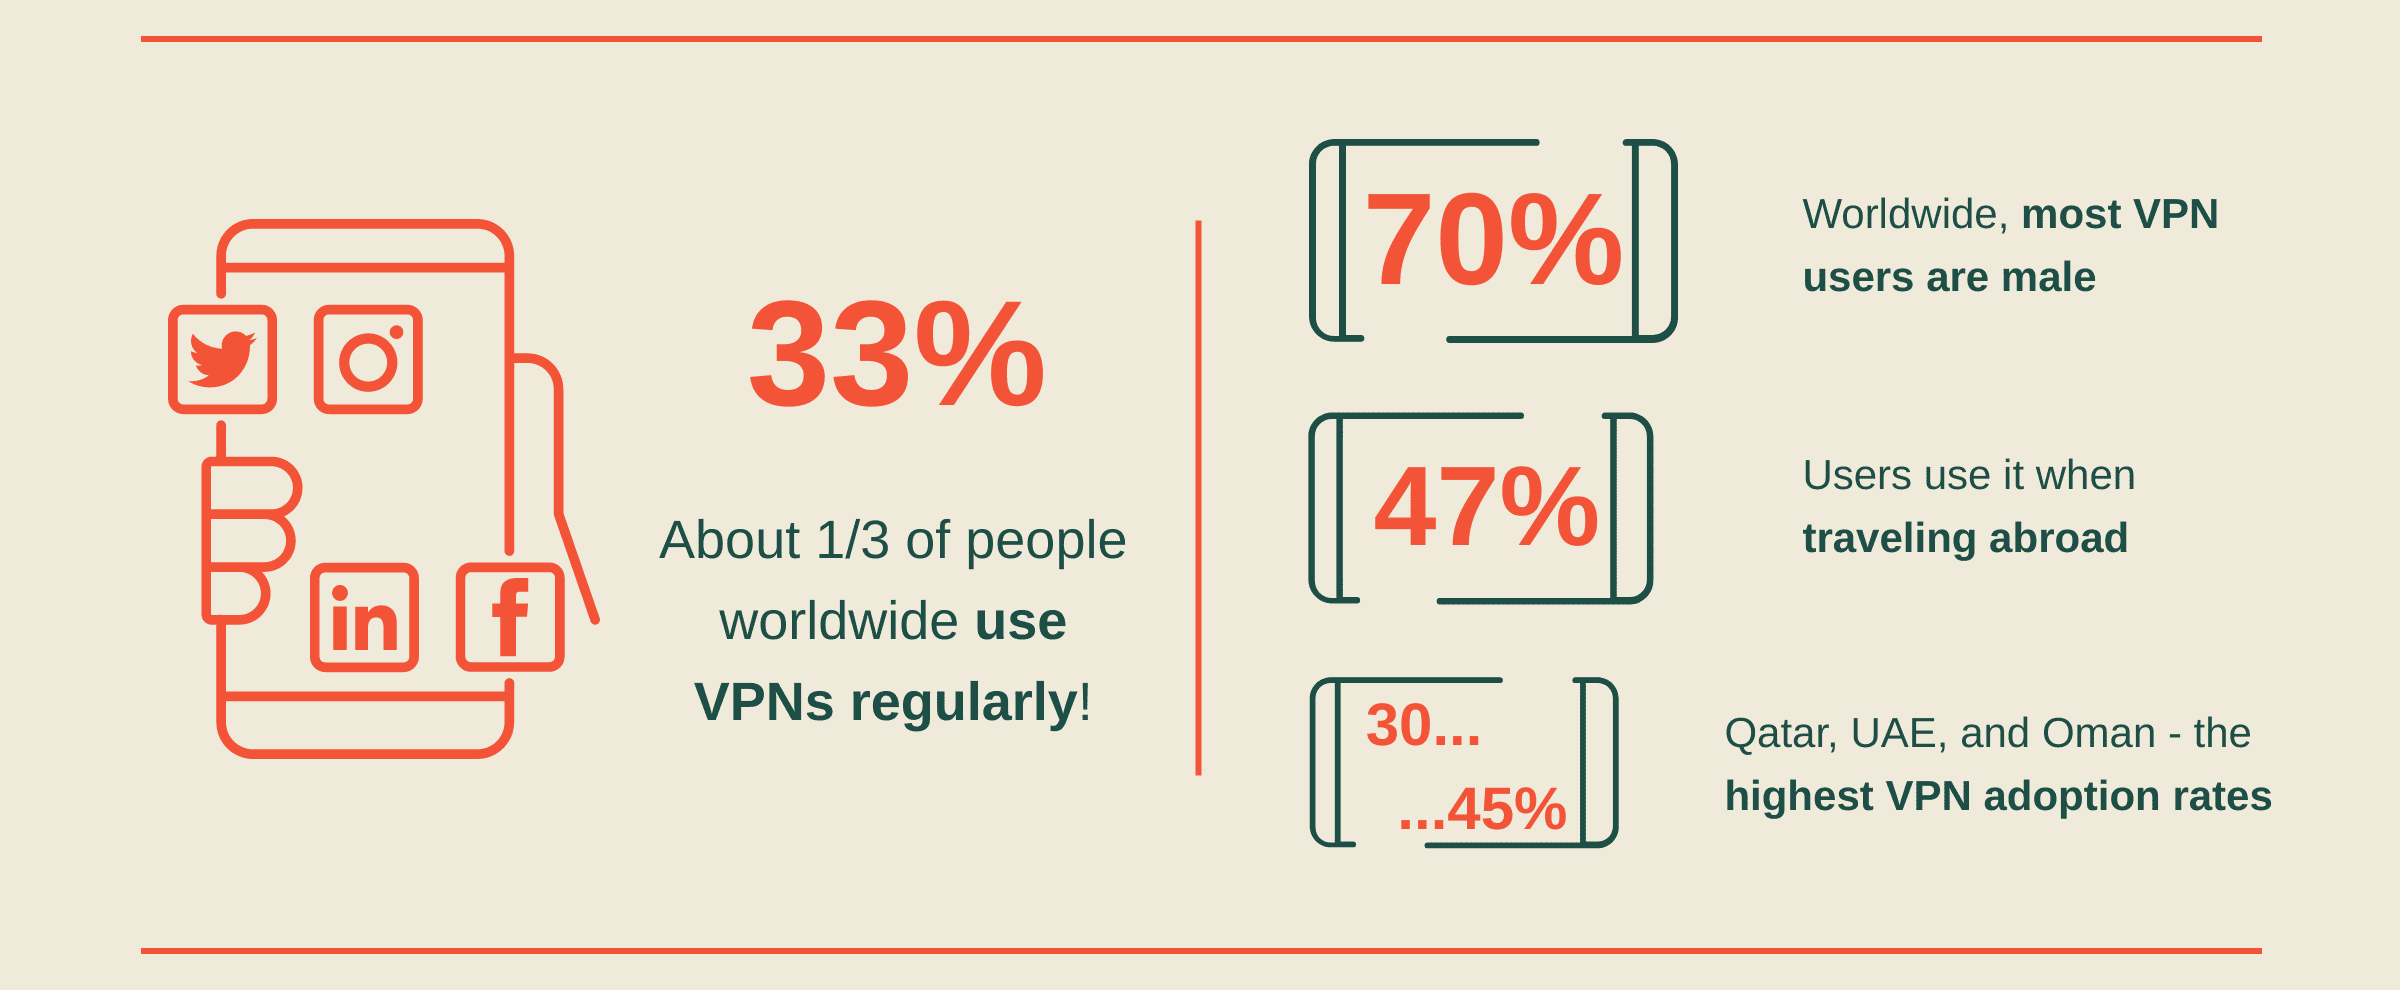 Key VPN usage statistics - why do people use VPNs?